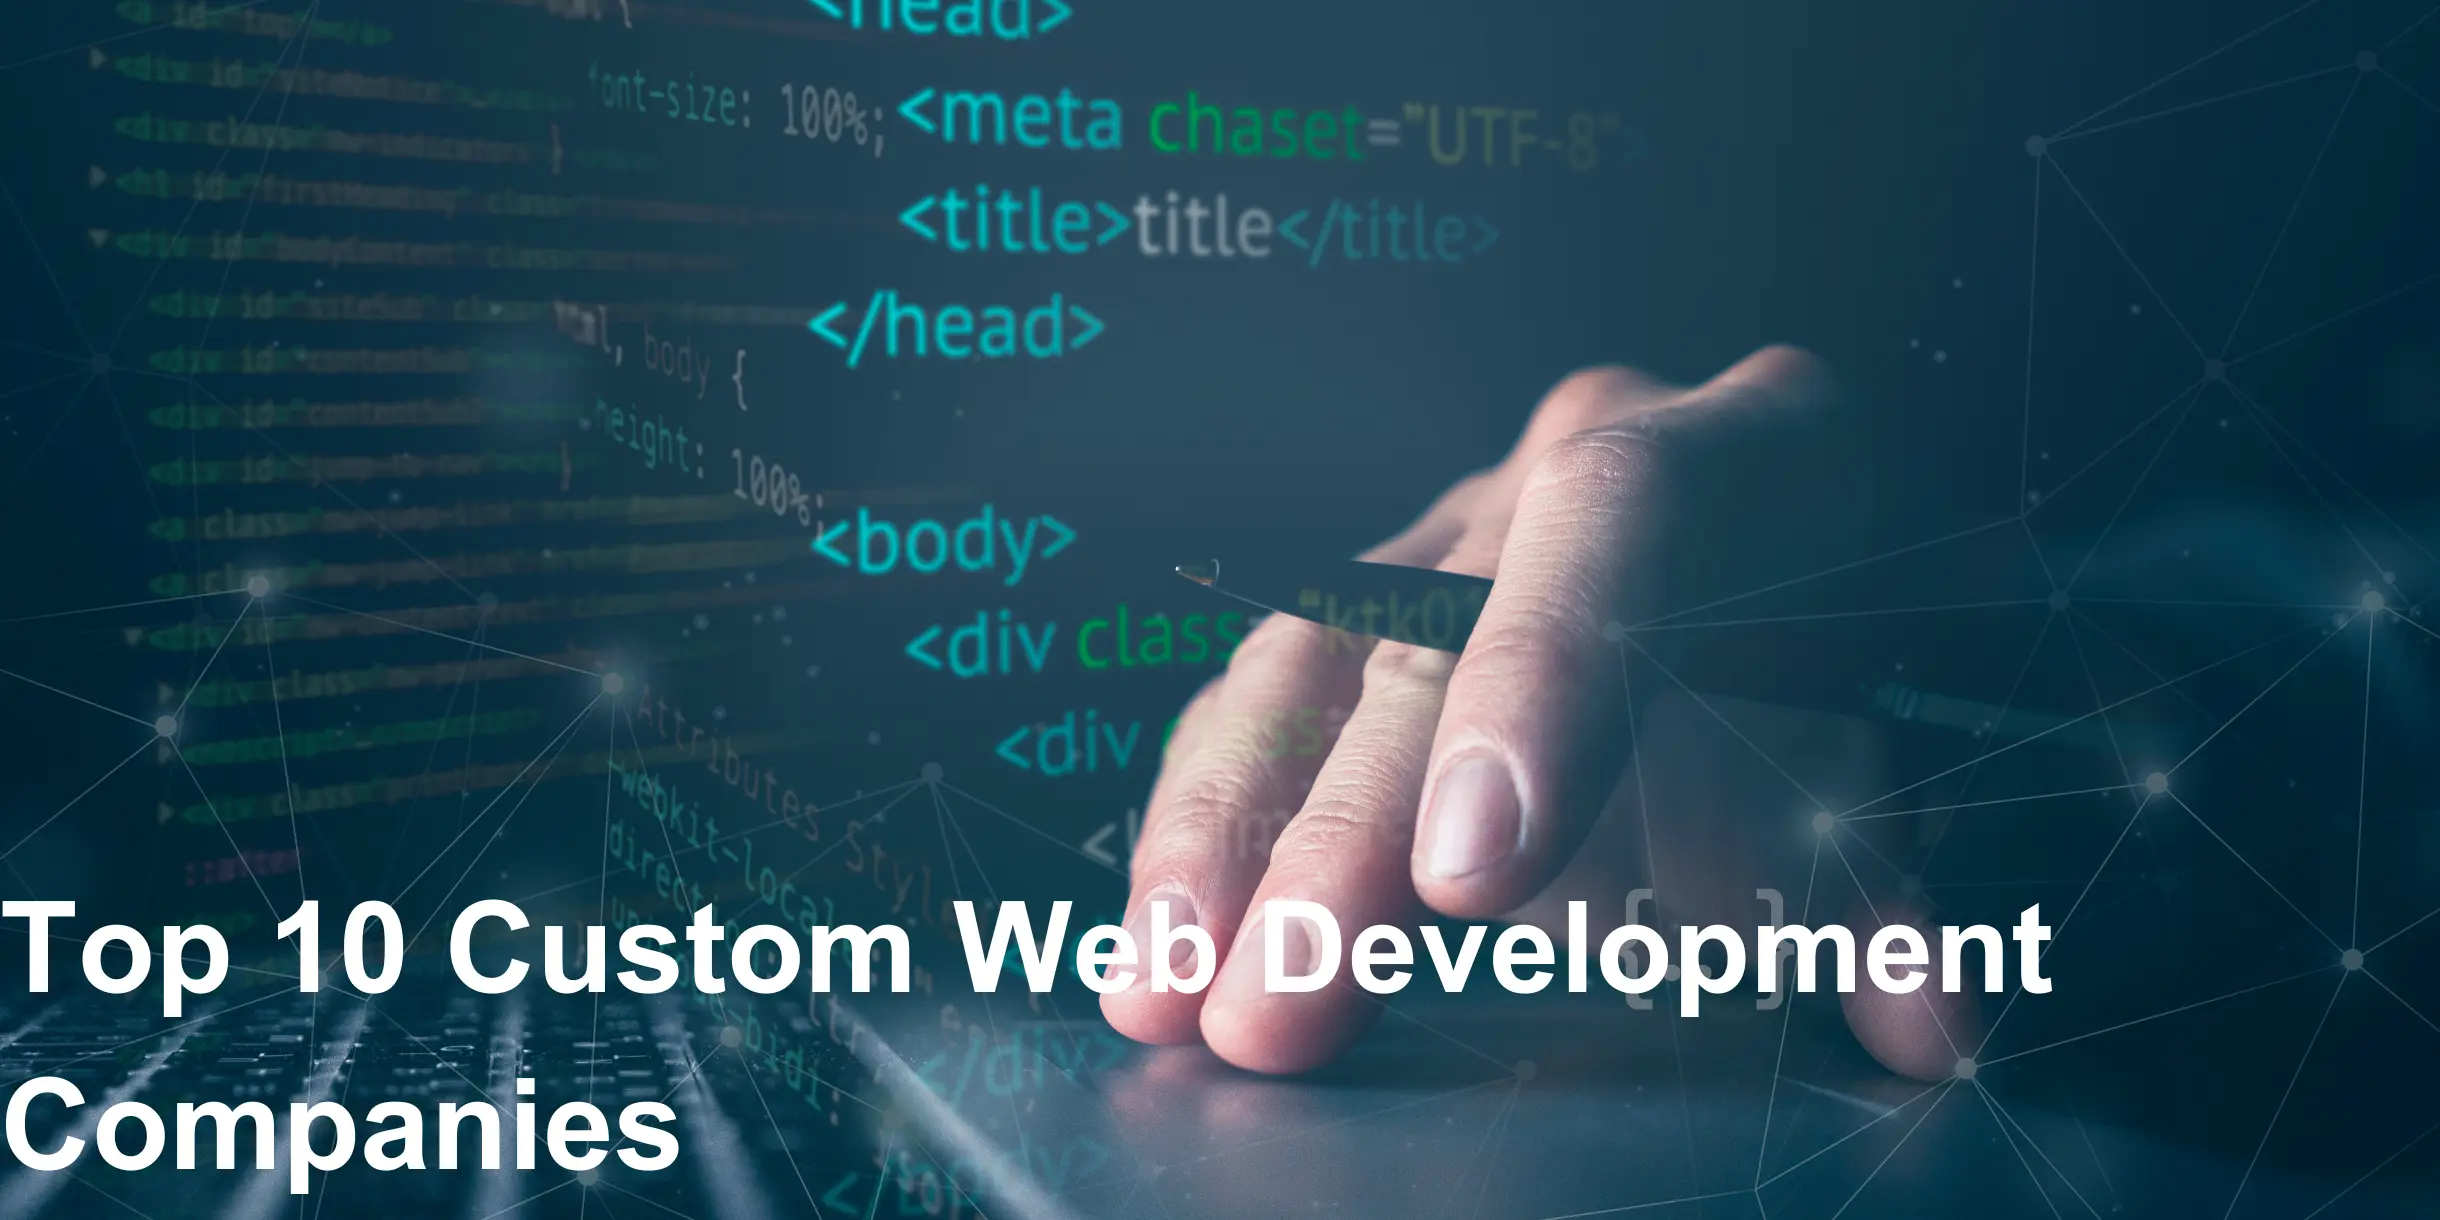 Top 10 Custom Web Development Companies in the USA